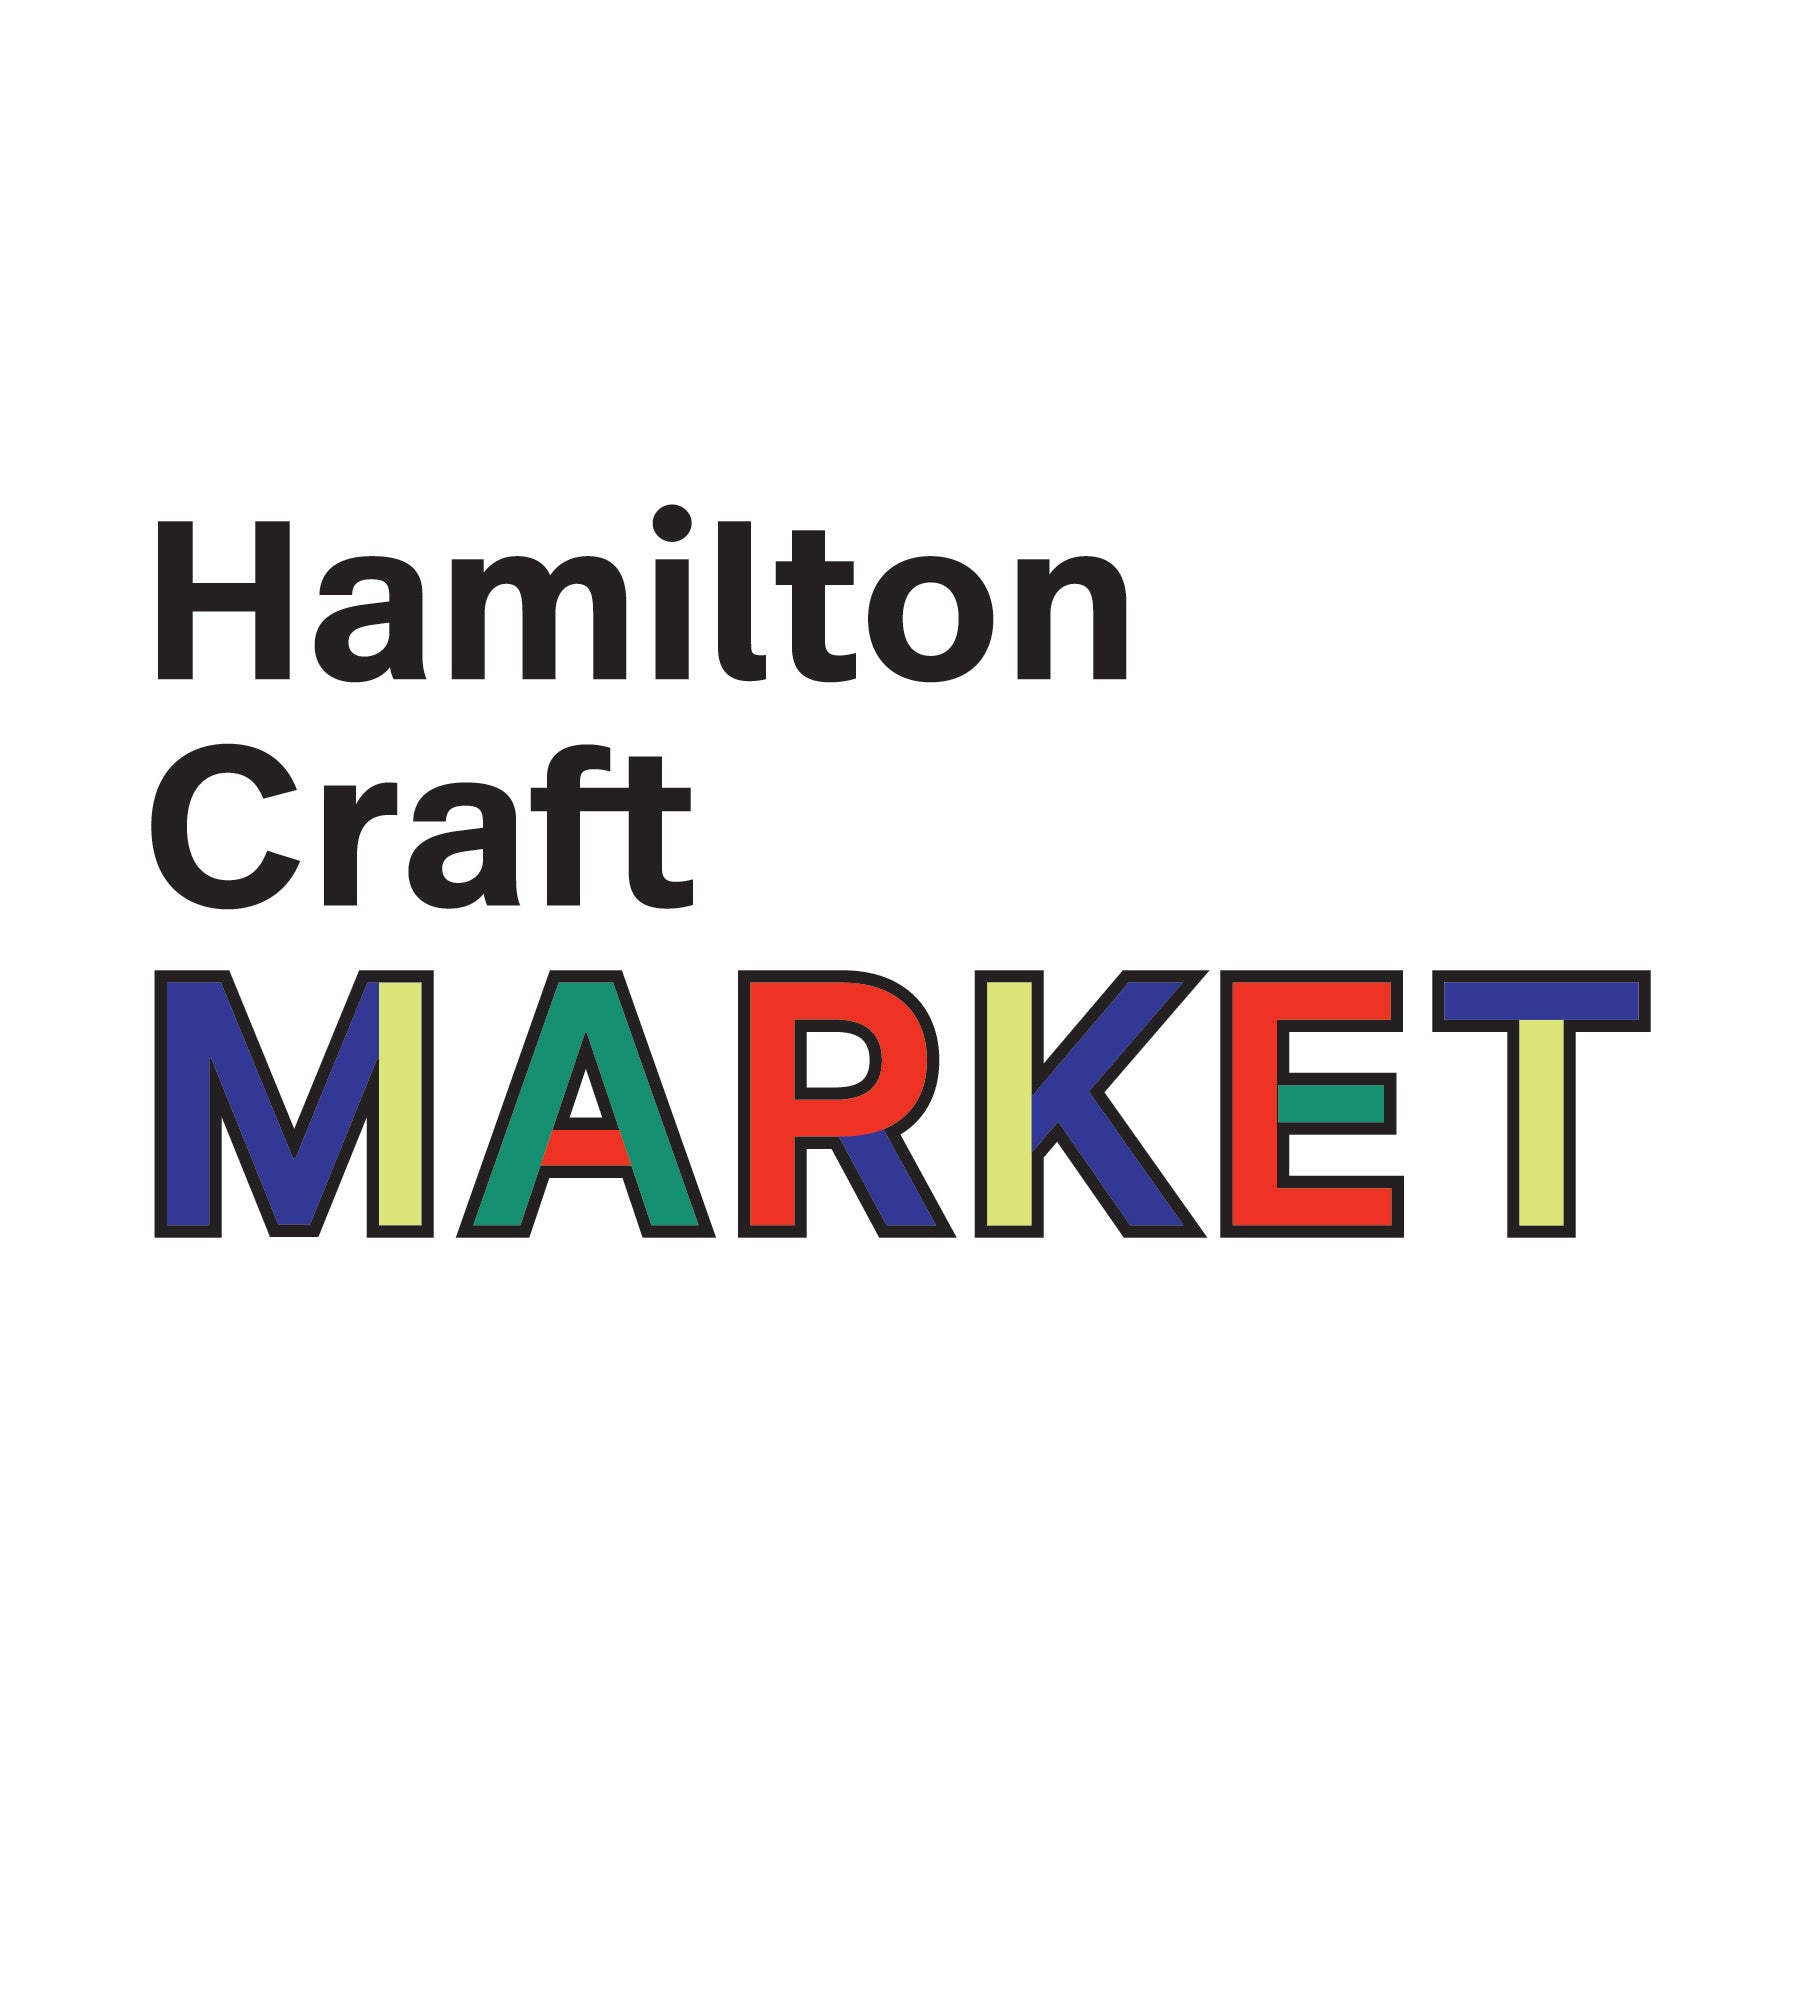 Winter Hamilton Craft Market Application Fee